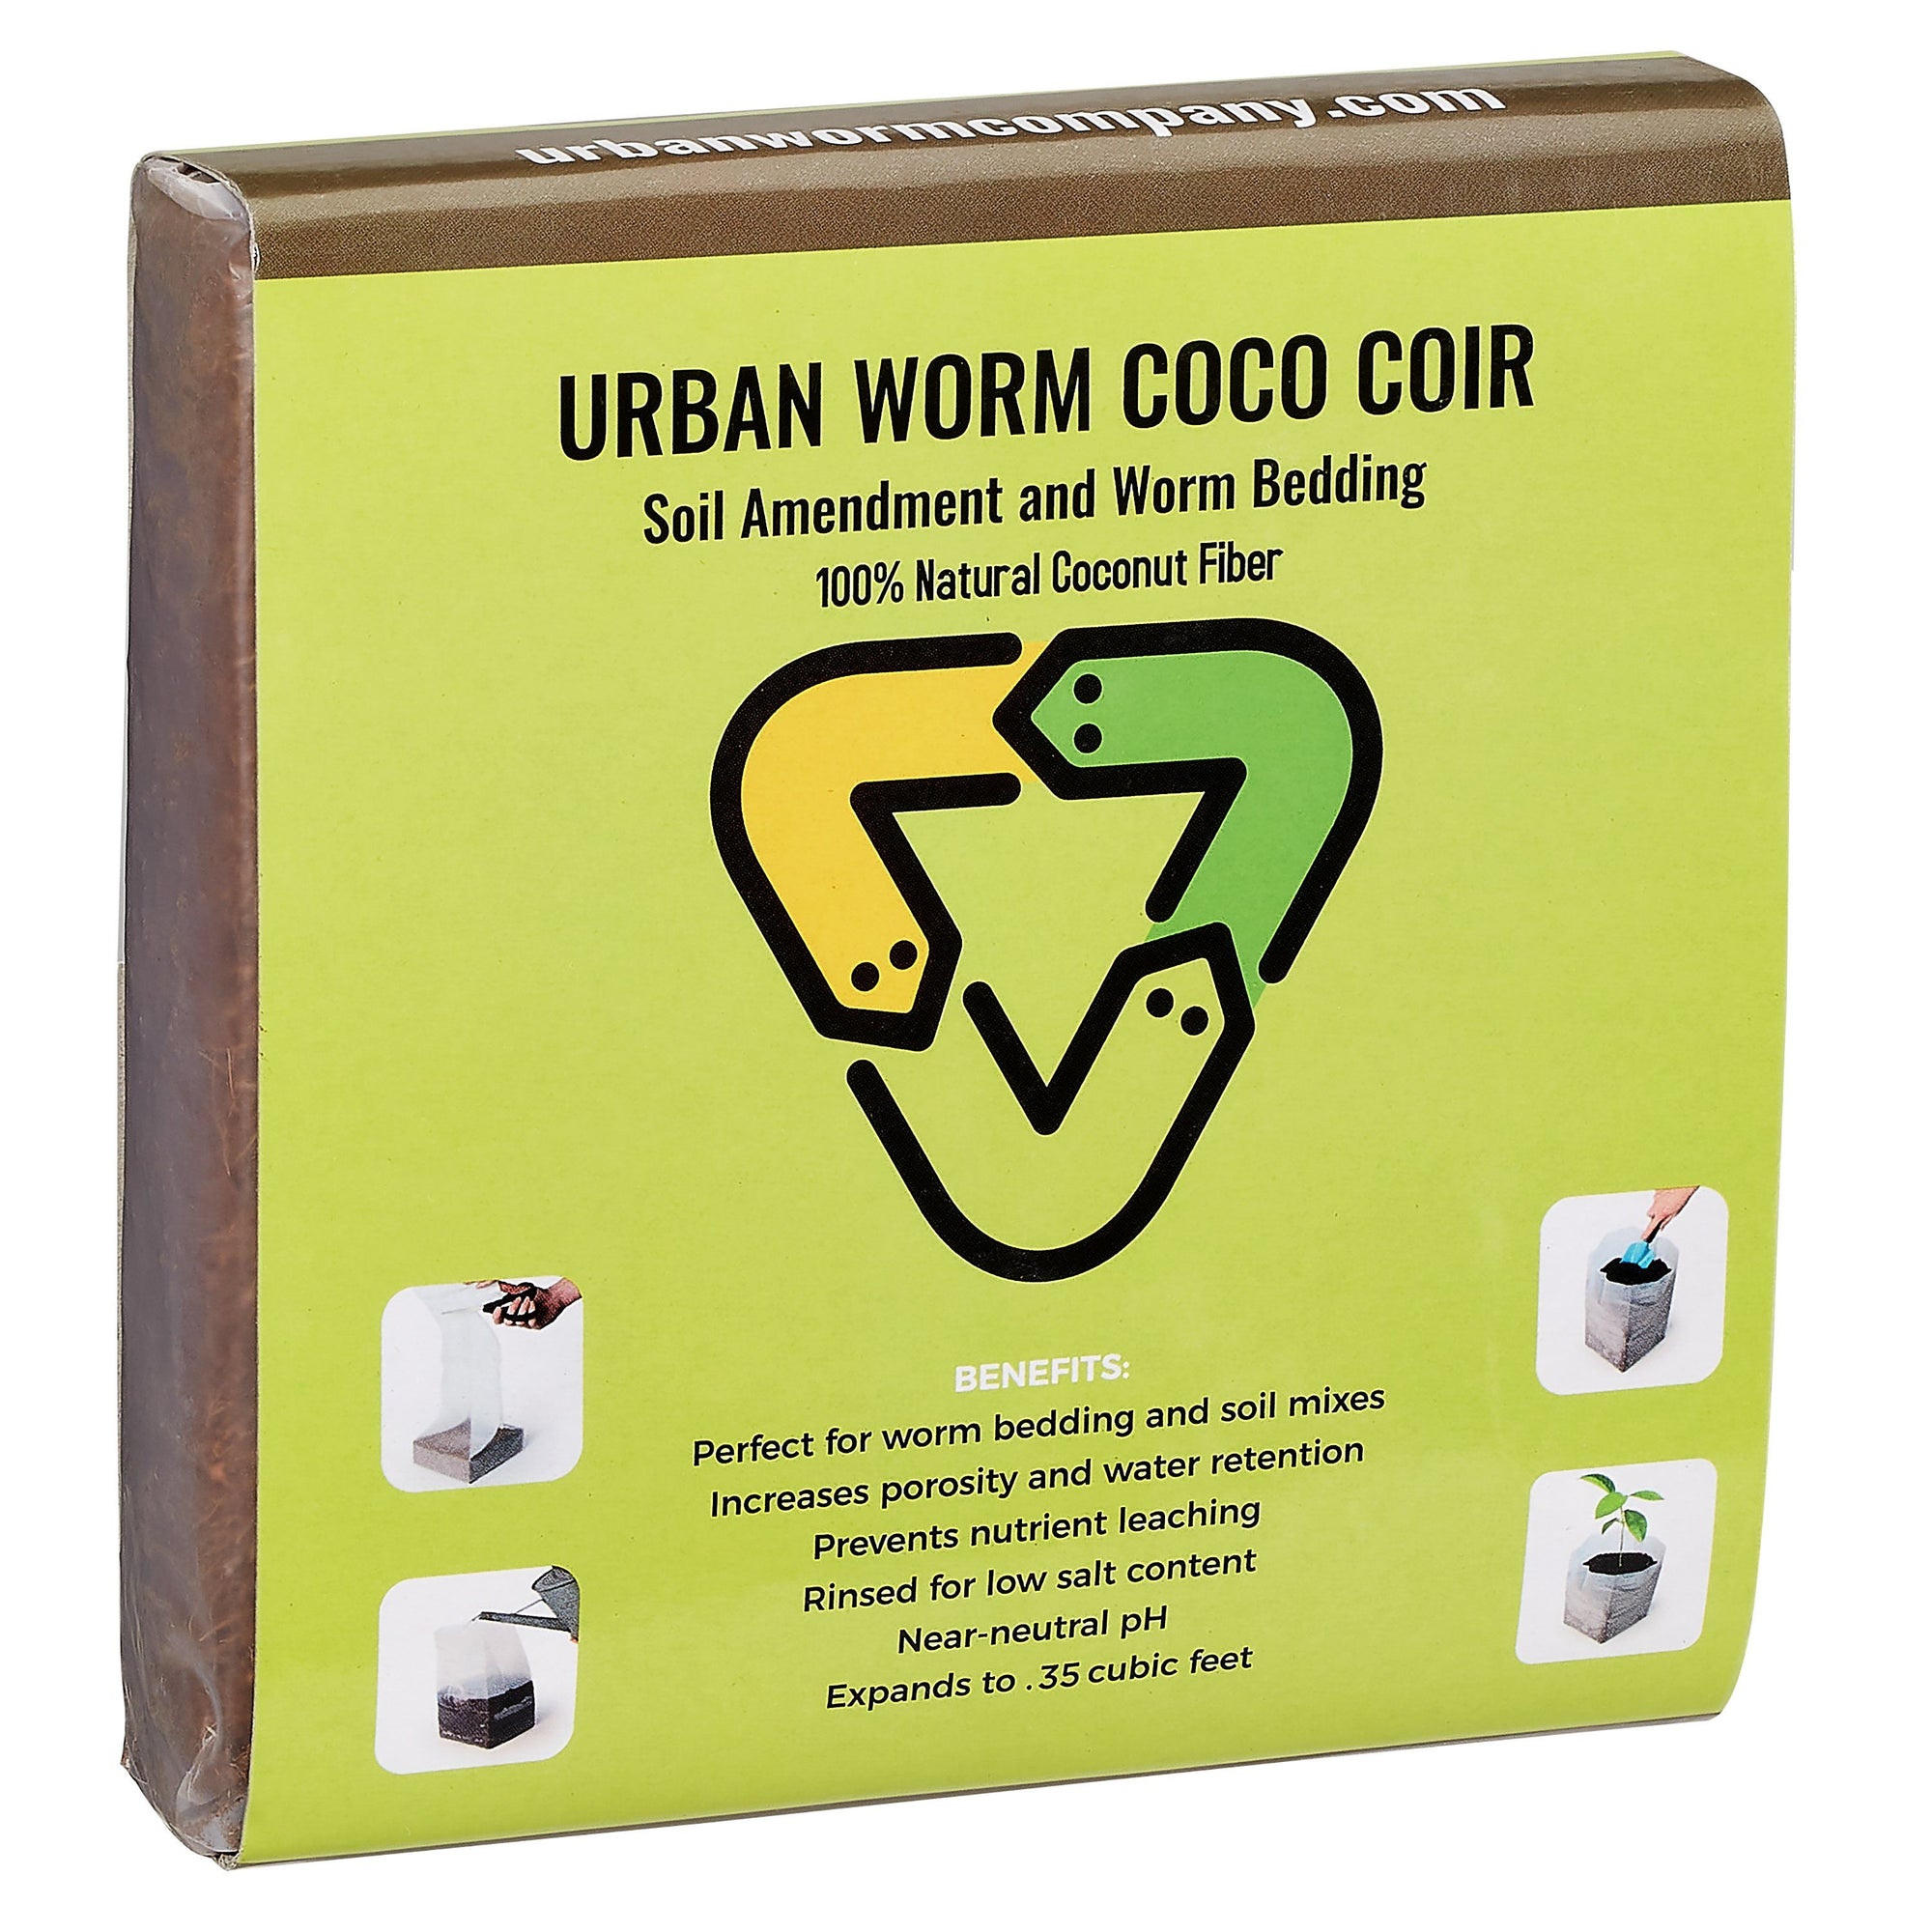 Urban Worm Coco Coir Urban Worm Company 